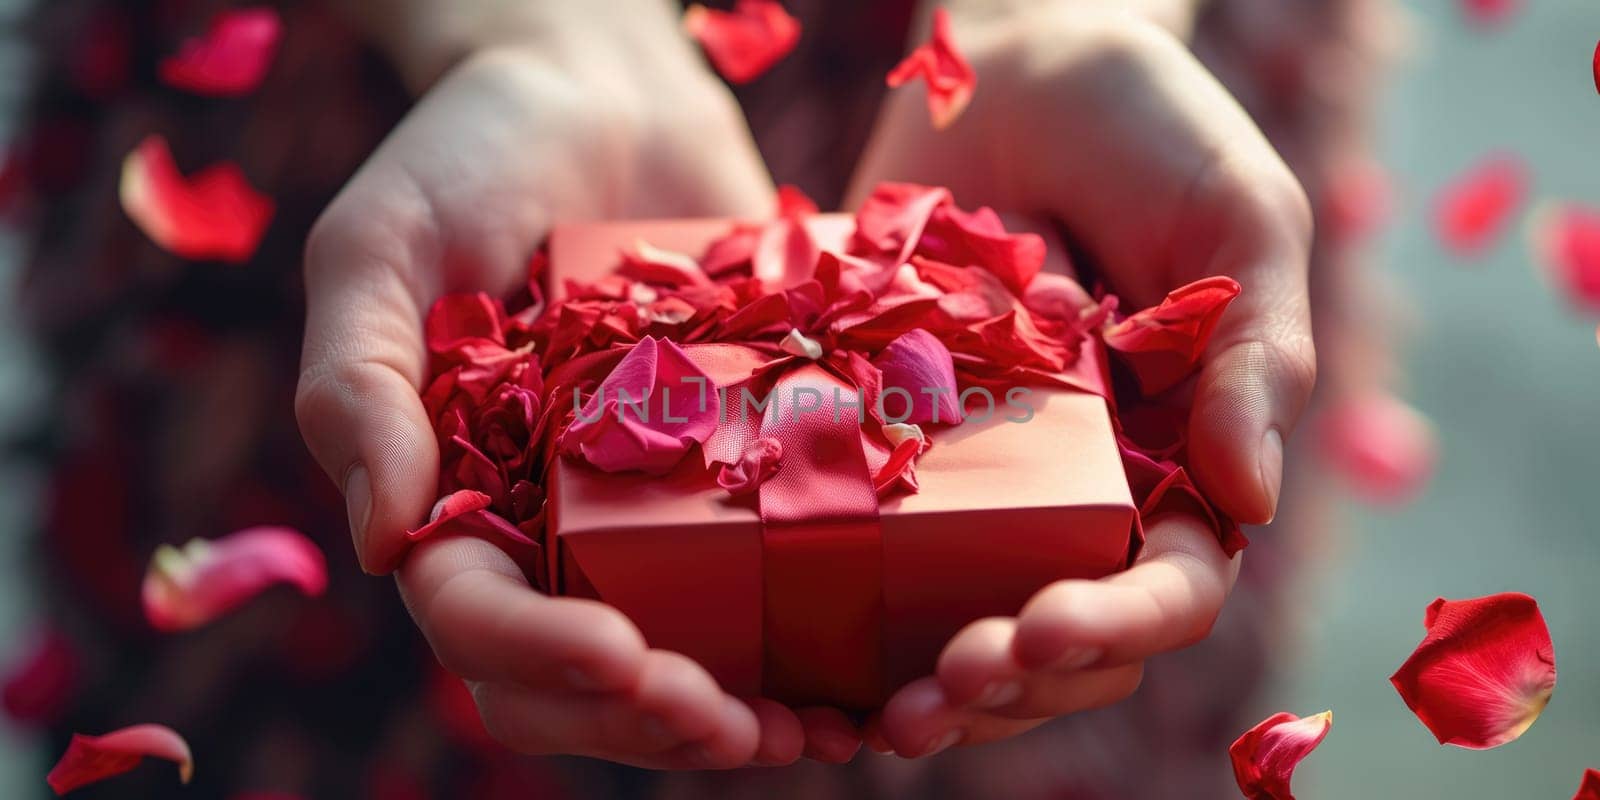 gift of love, valentines day present pragma by biancoblue